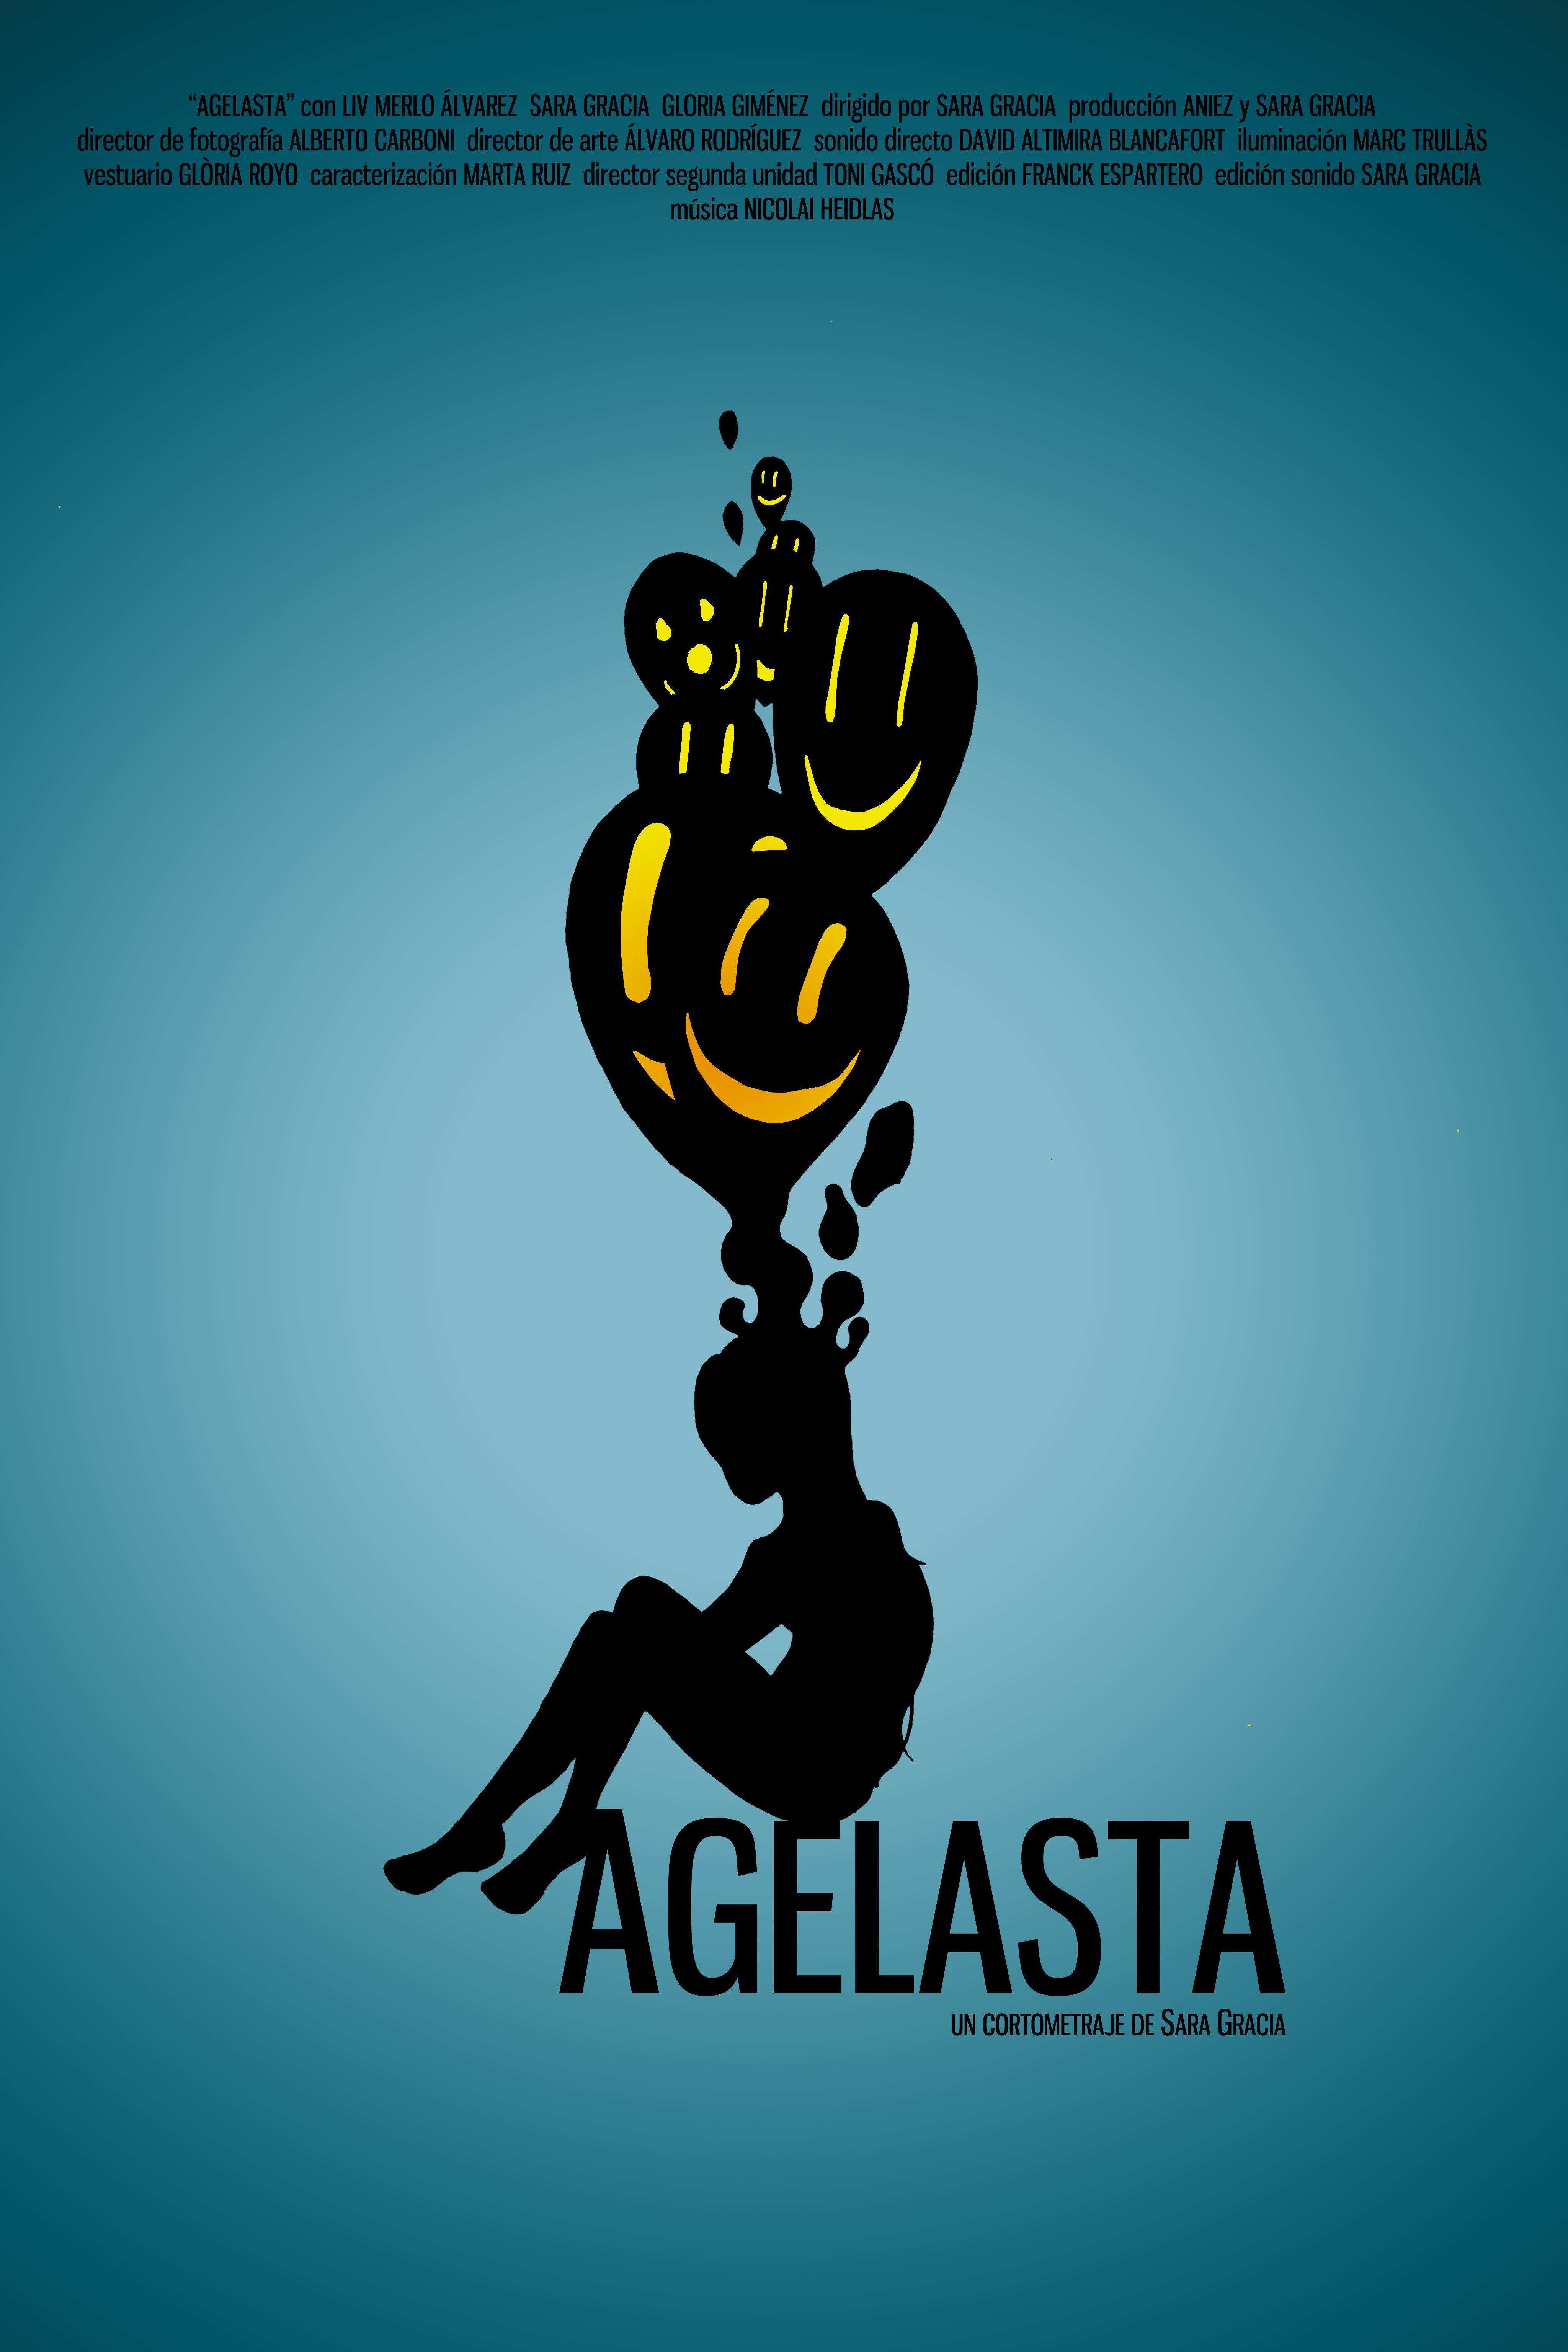 Agelasta film at the iChill Manila International Film Fest Jan 2018